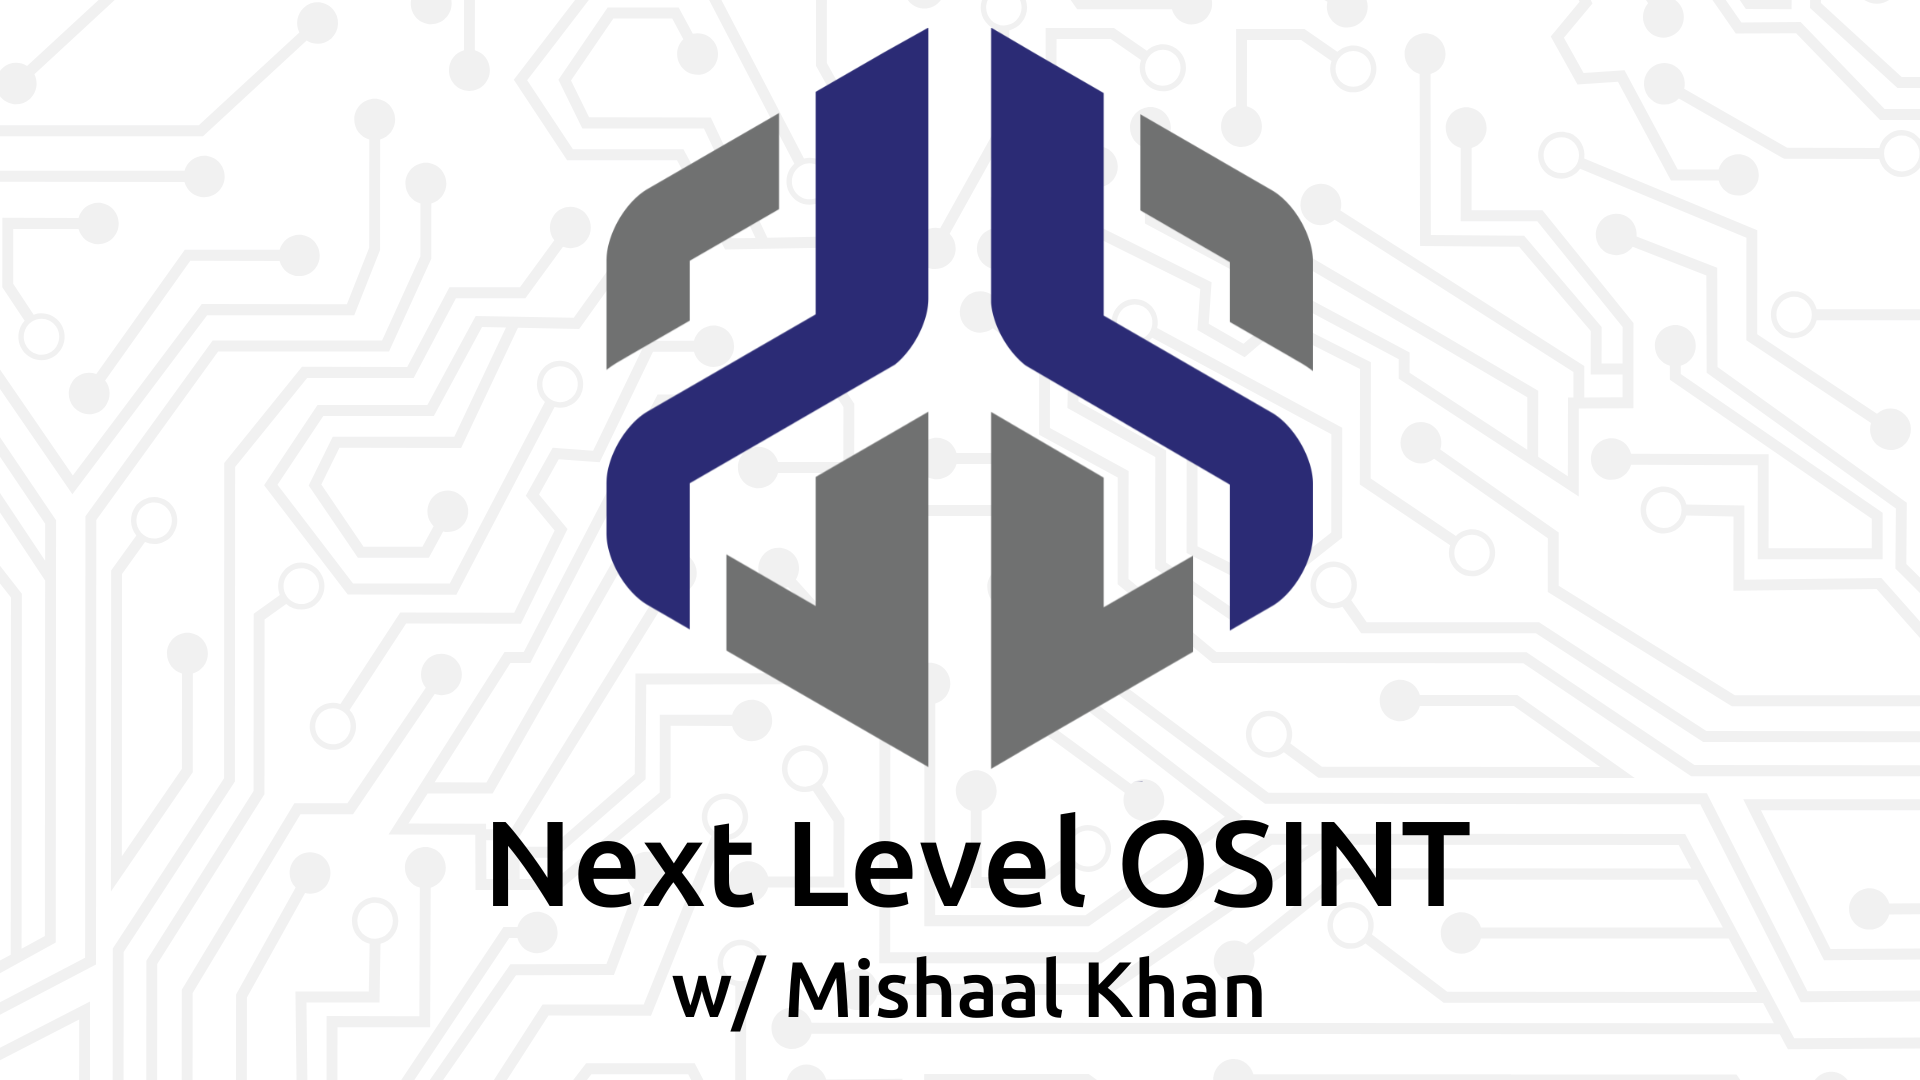 Next Level OSINT with Mishaal Khan